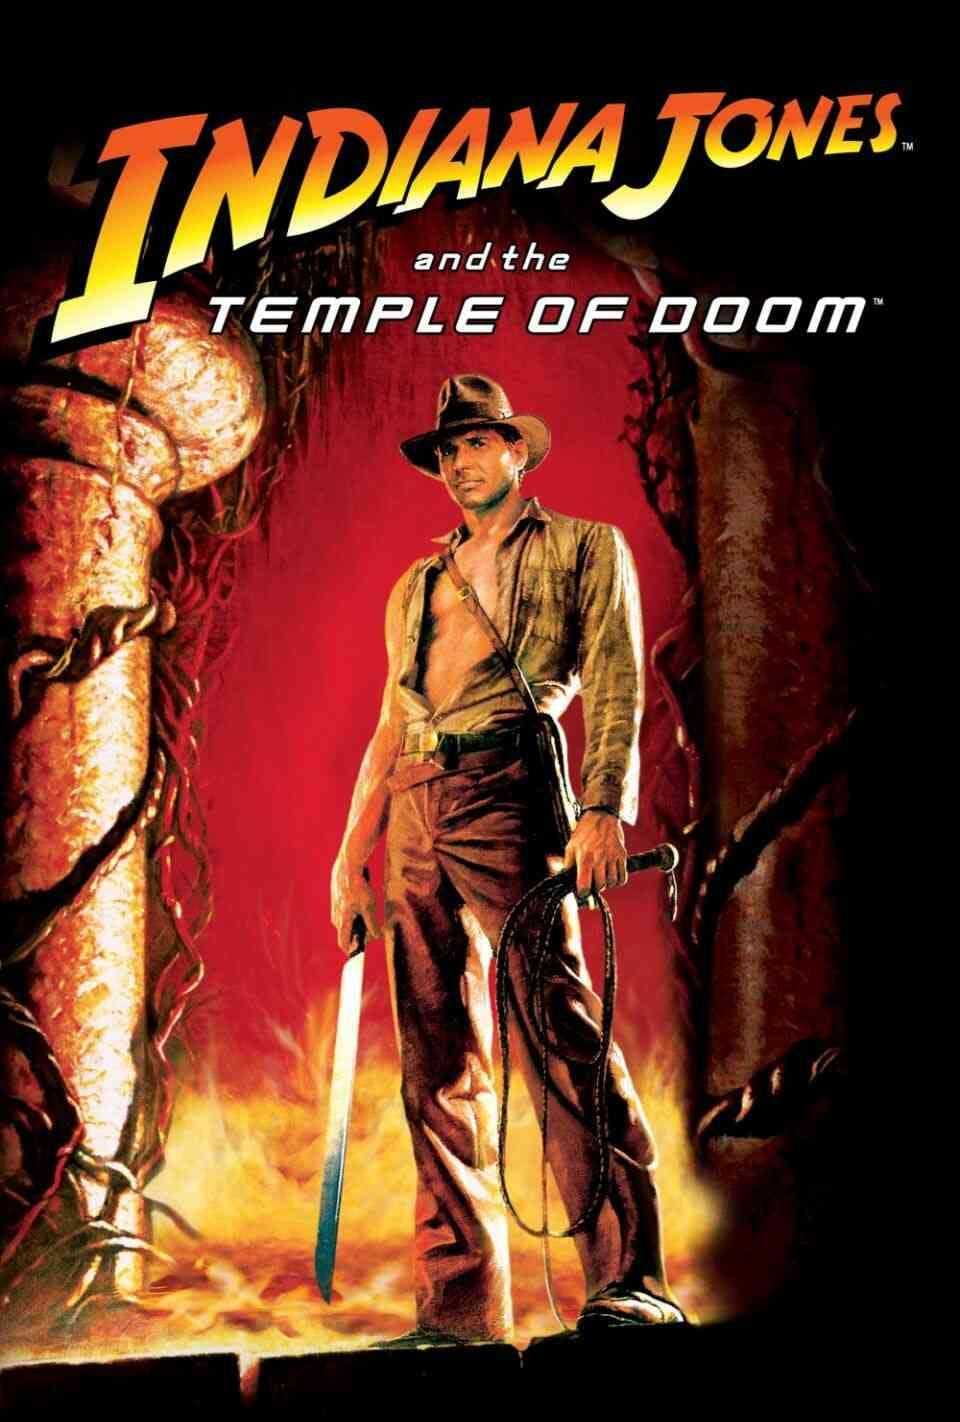 Read Indiana Jones and the Temple of Doom screenplay.